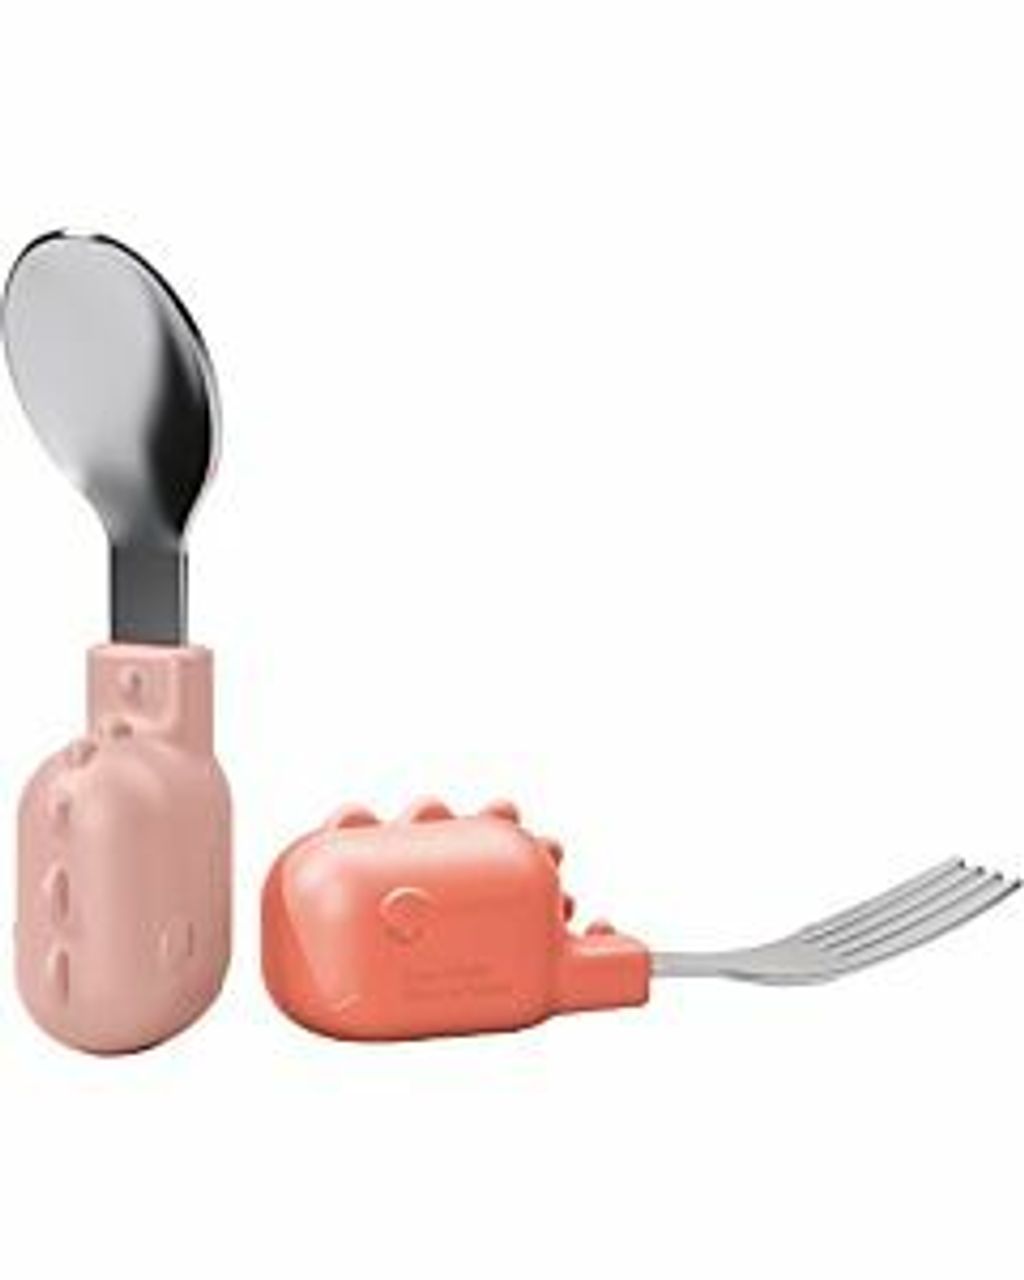 he_or_she_baby_fork_spoon_set_-_pink_-_1.jpg